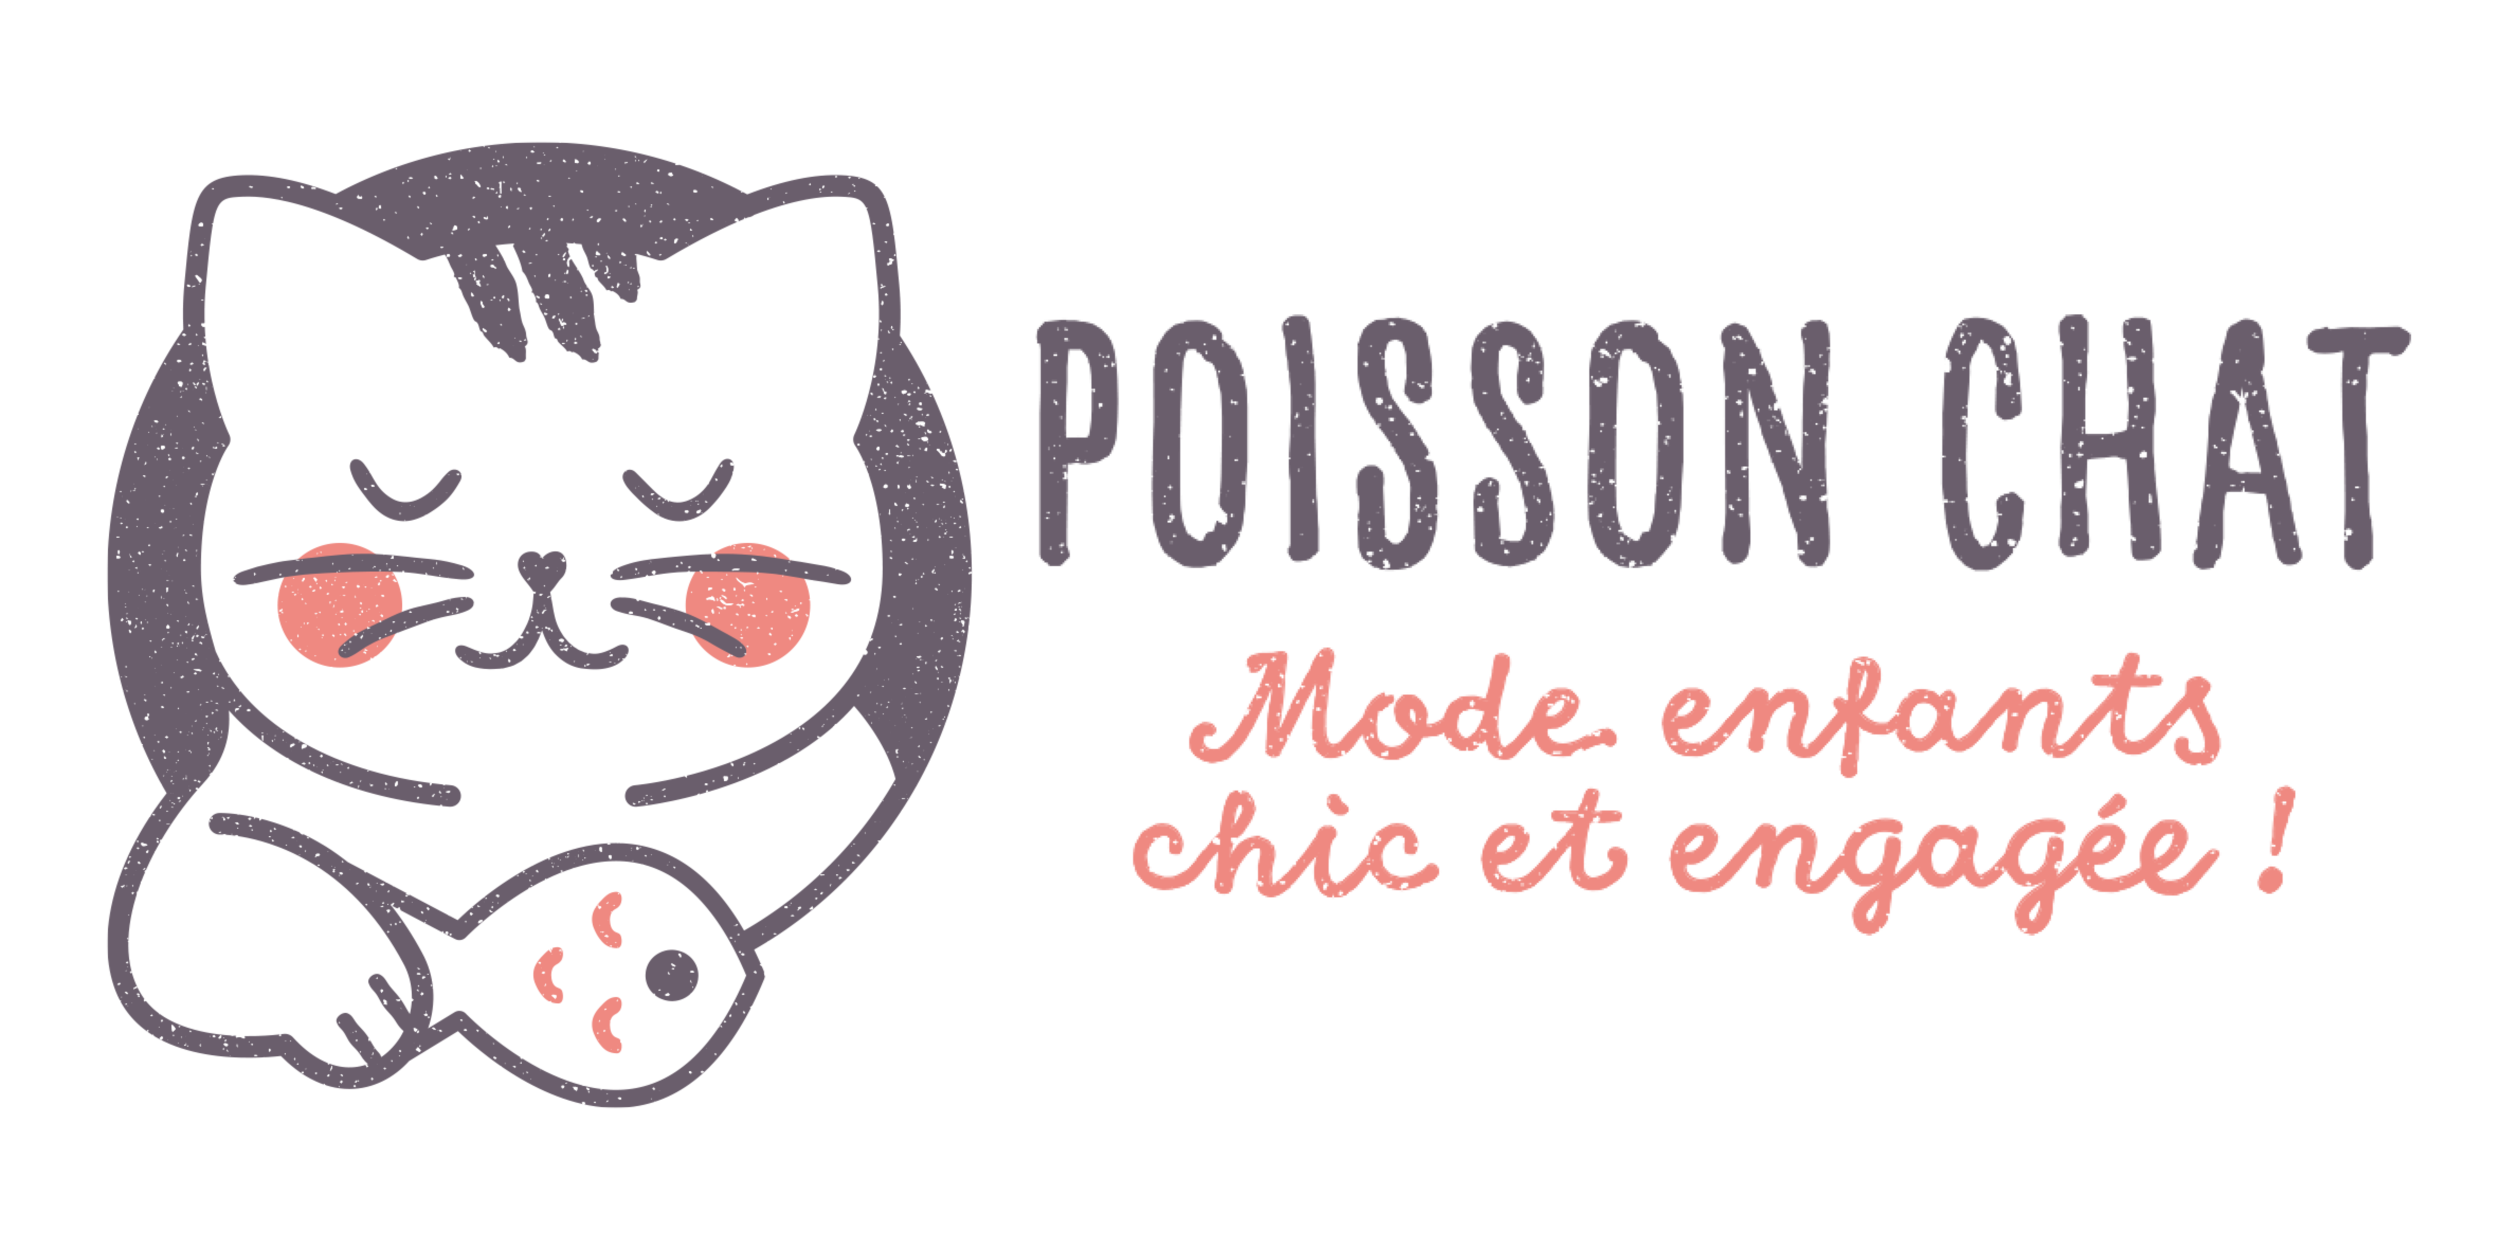 Poisson Chat